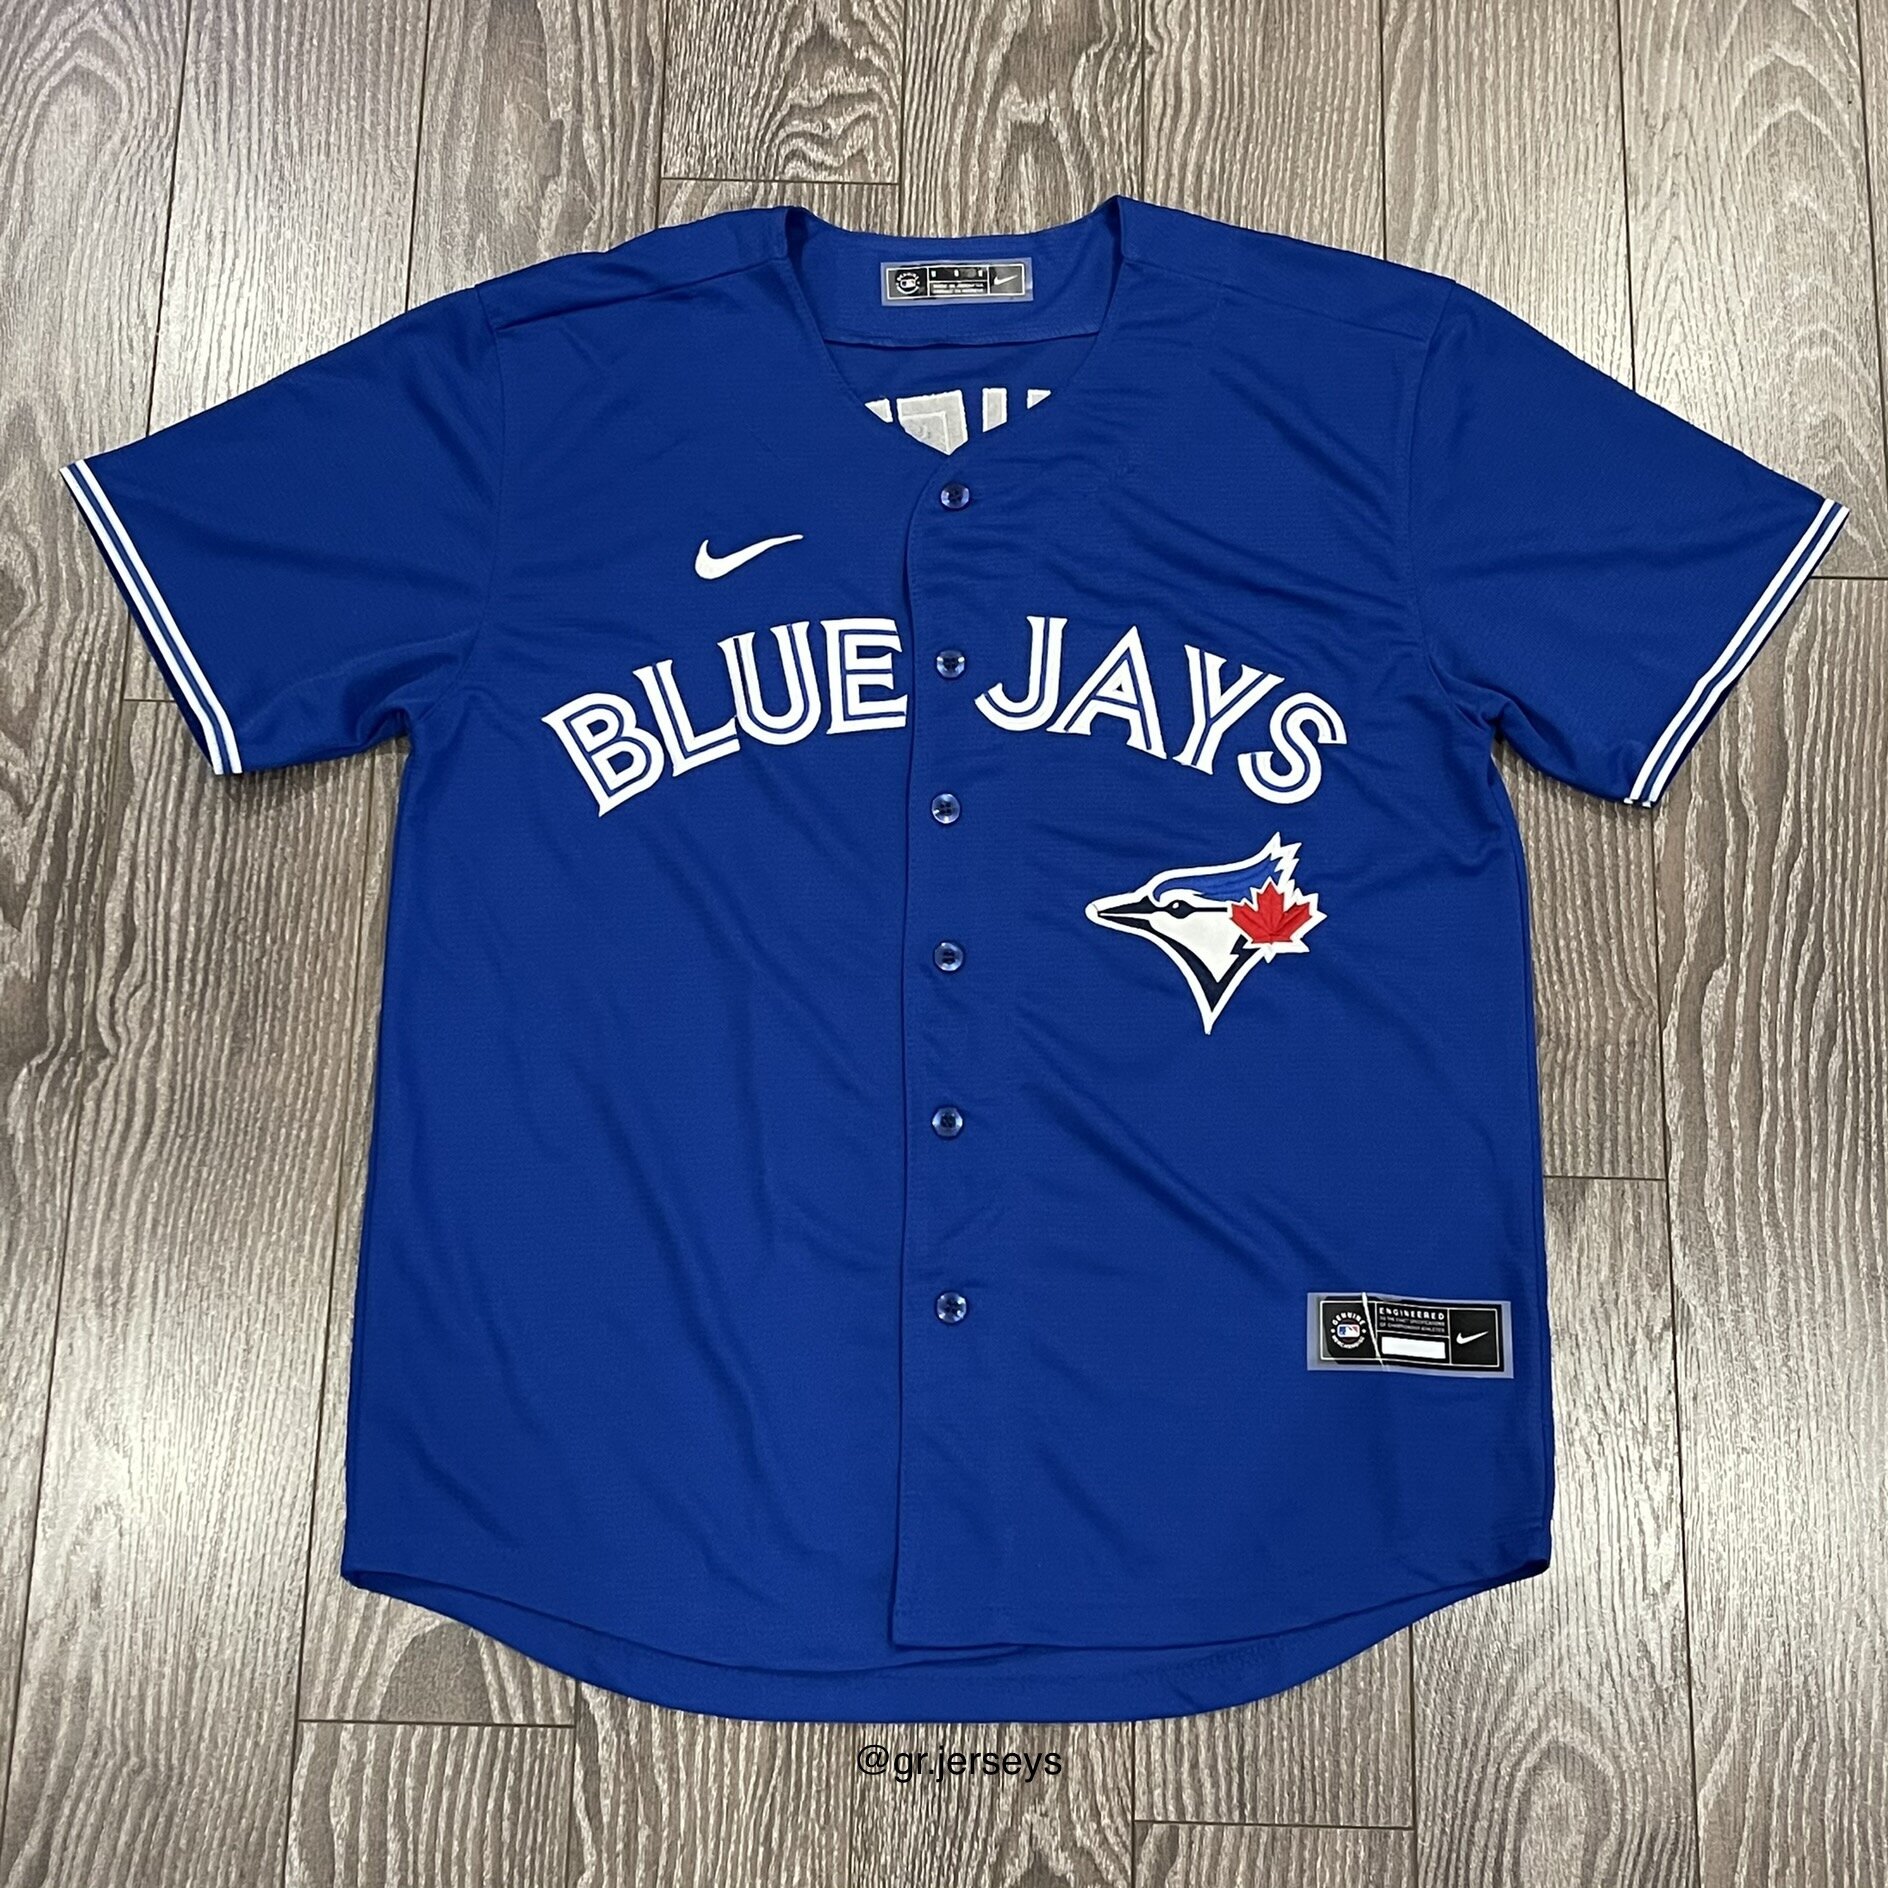 Bo Bichette #11 Toronto Blue Jays Baseball jersey Size L Large.